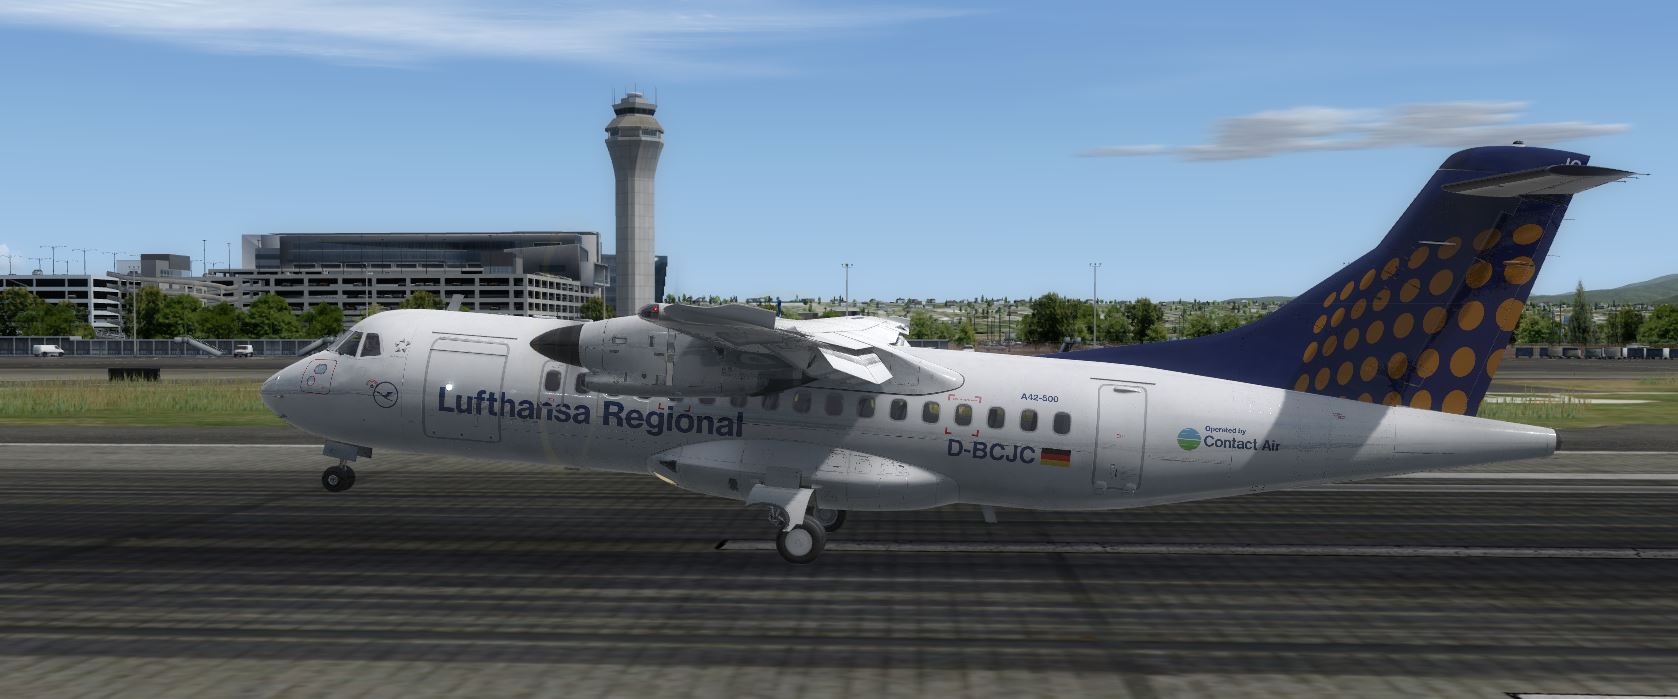 ATR42-500 Lufthansa-3595 